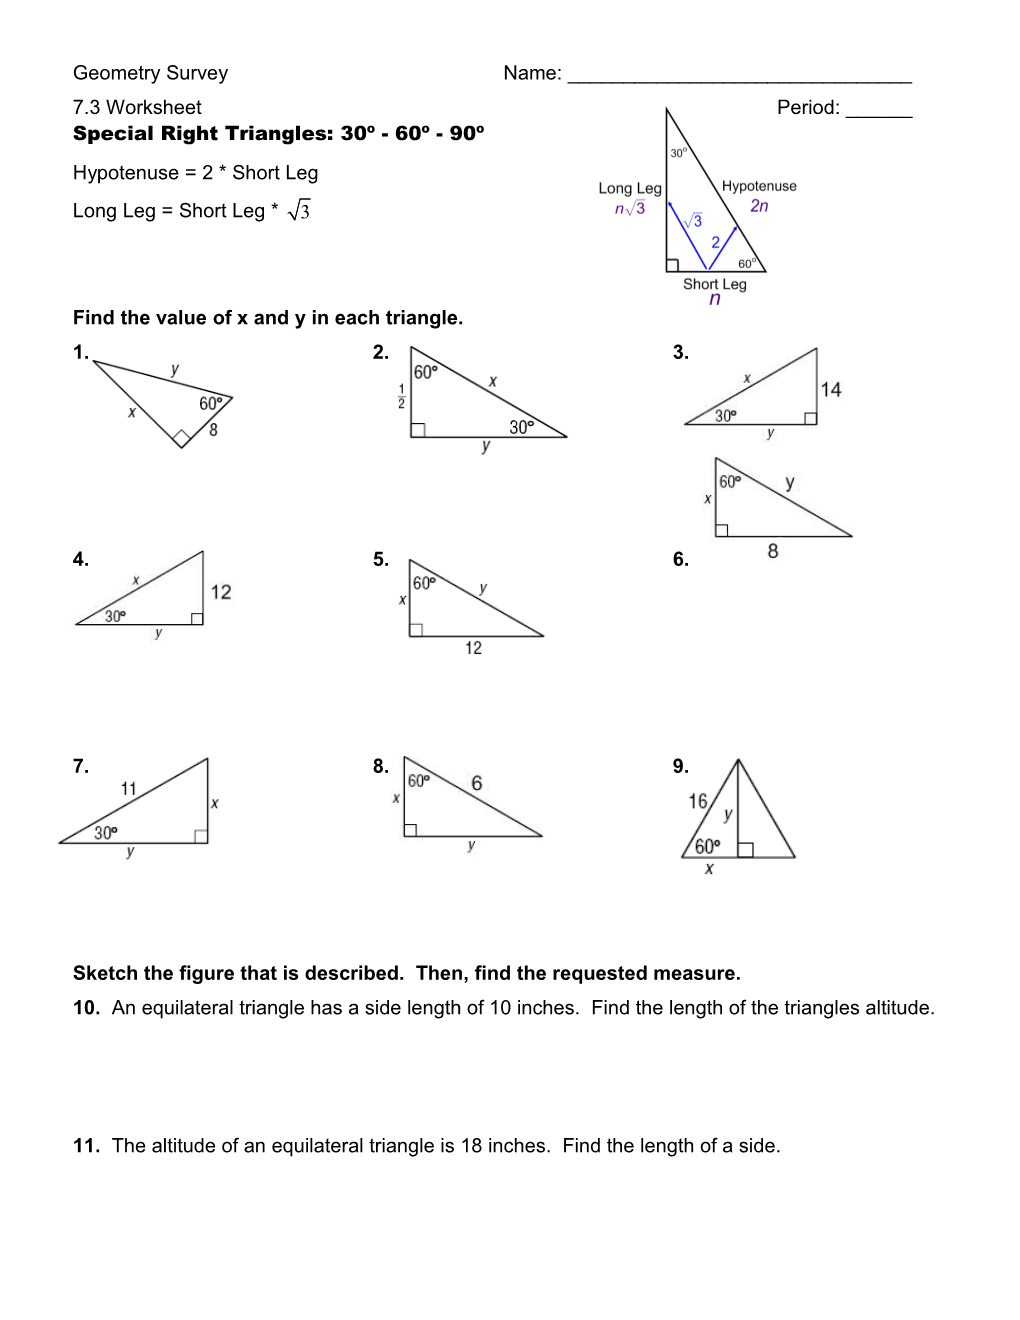 Special Right Triangles: 30º - 60º - 90º